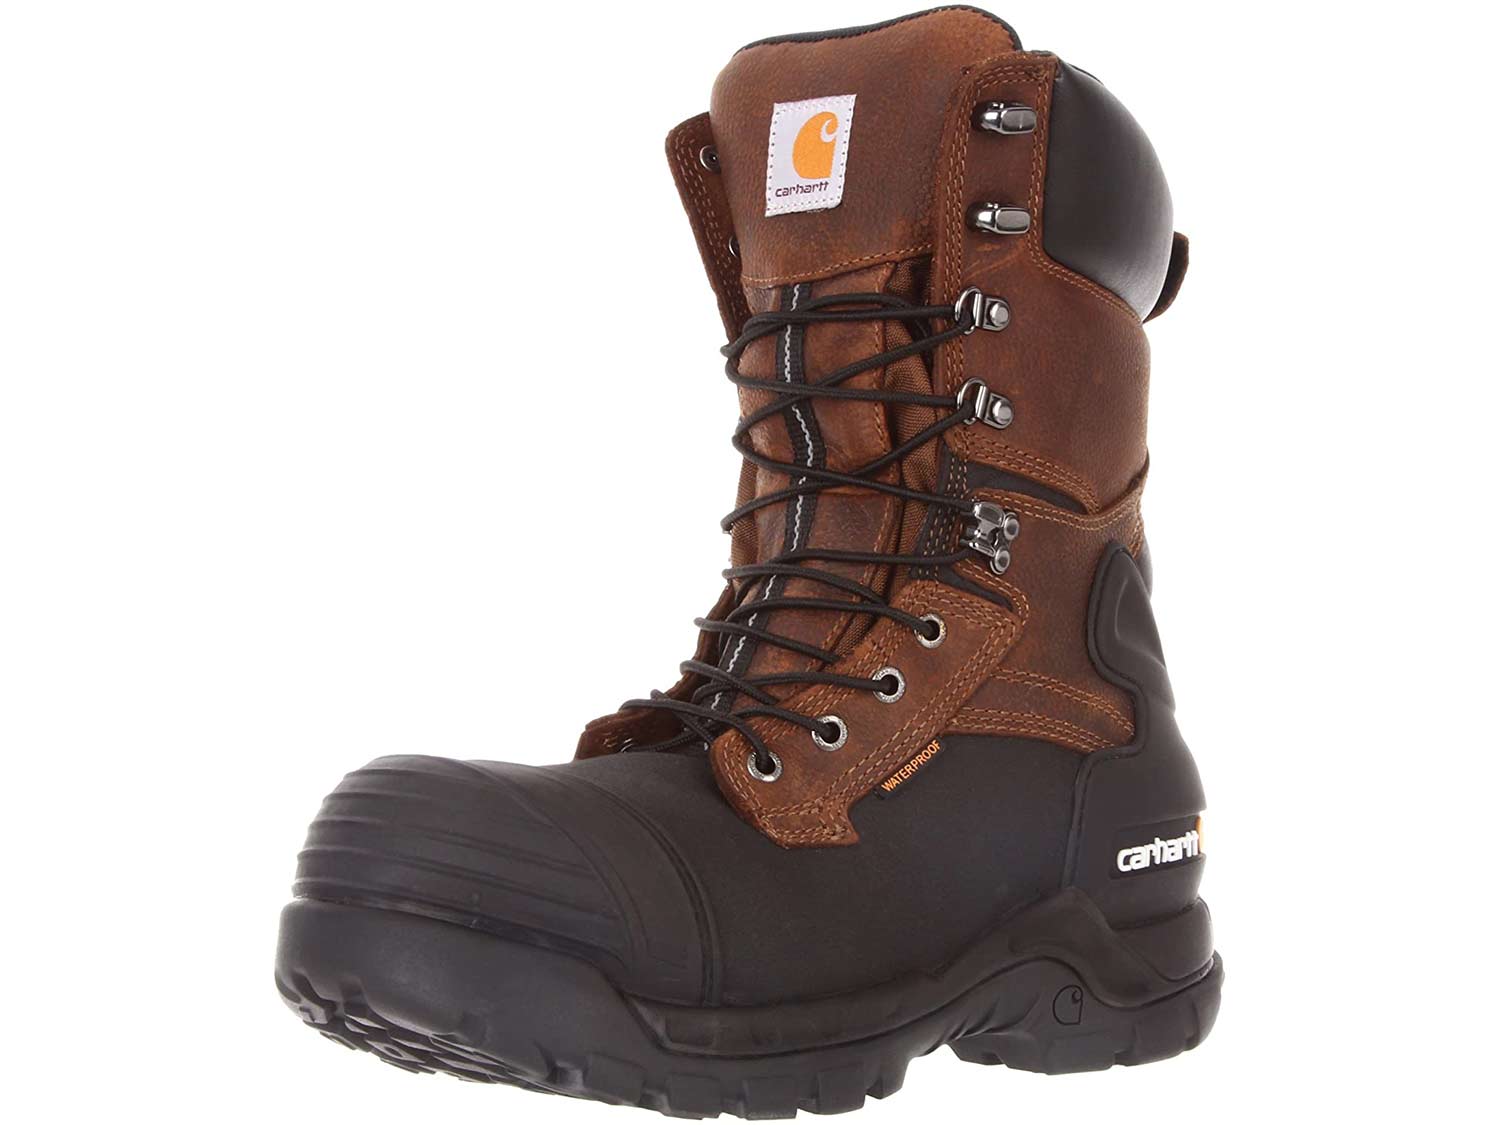 Carhartt Men's 10" Waterproof Insulated PAC Composite Toe Boot